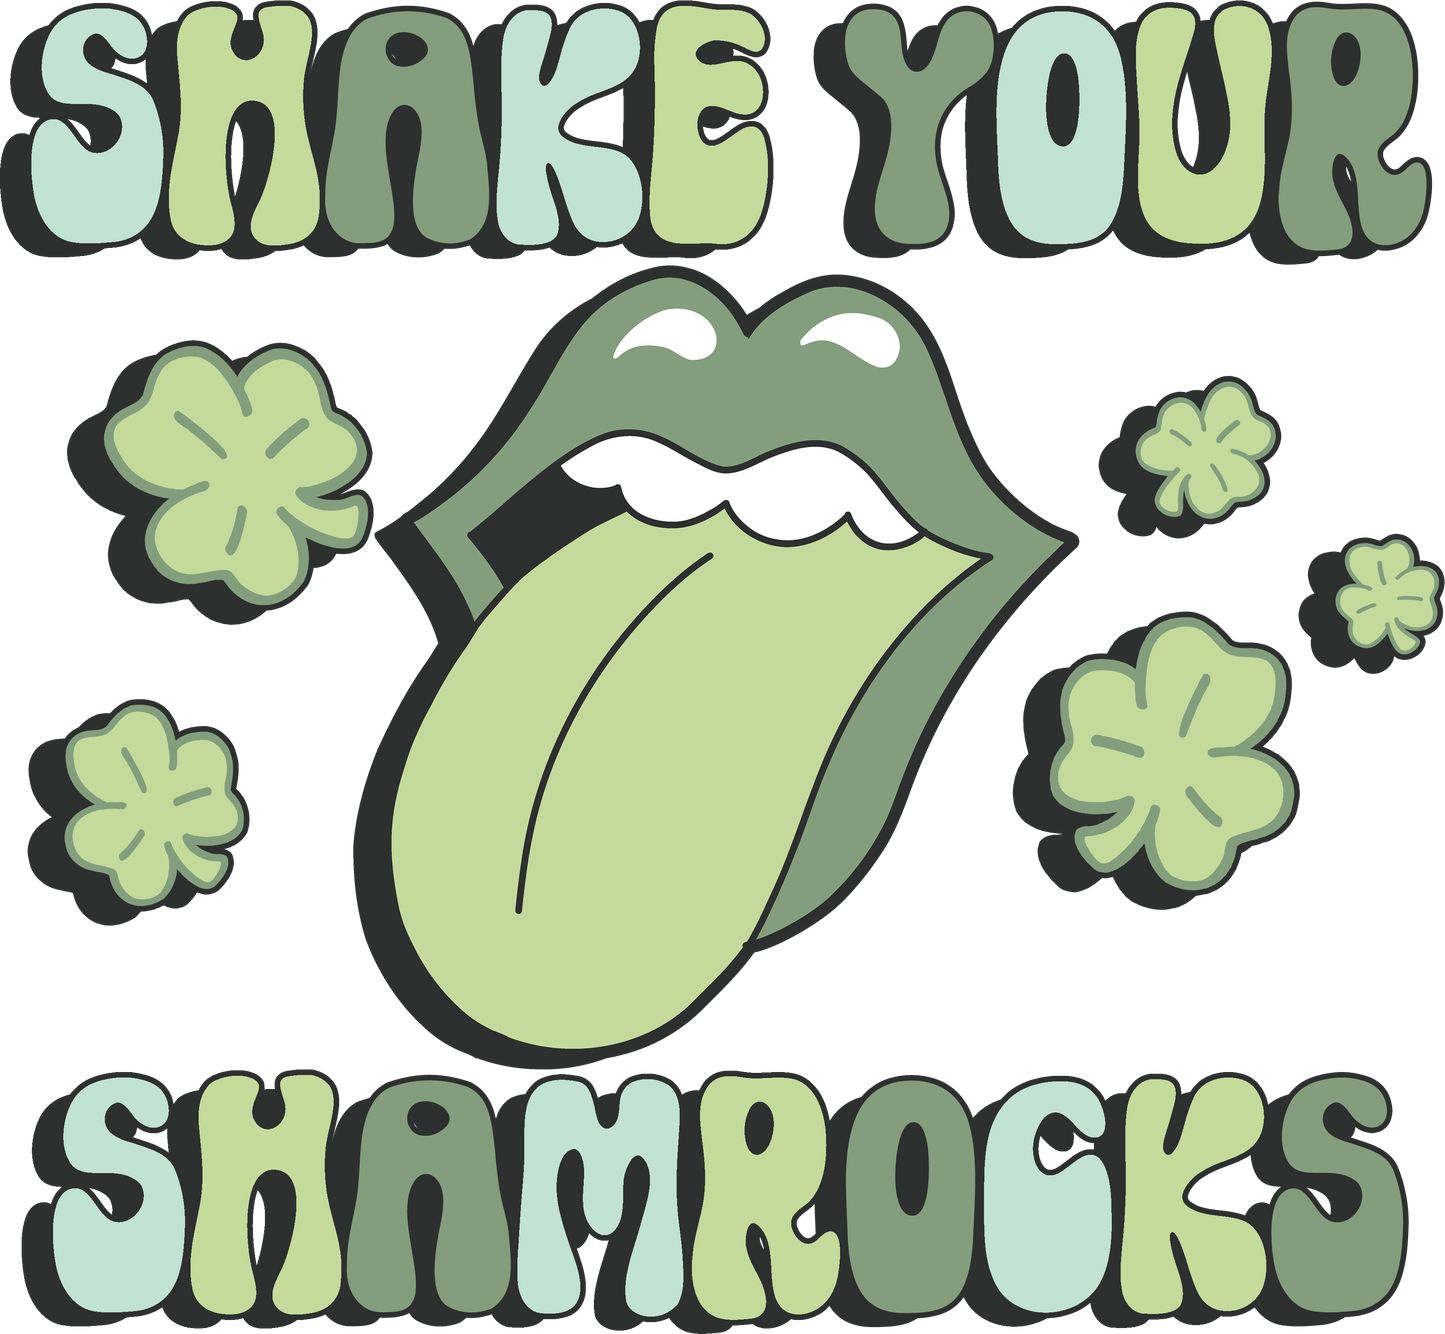 Shake Your Shamrocks 2 DTF